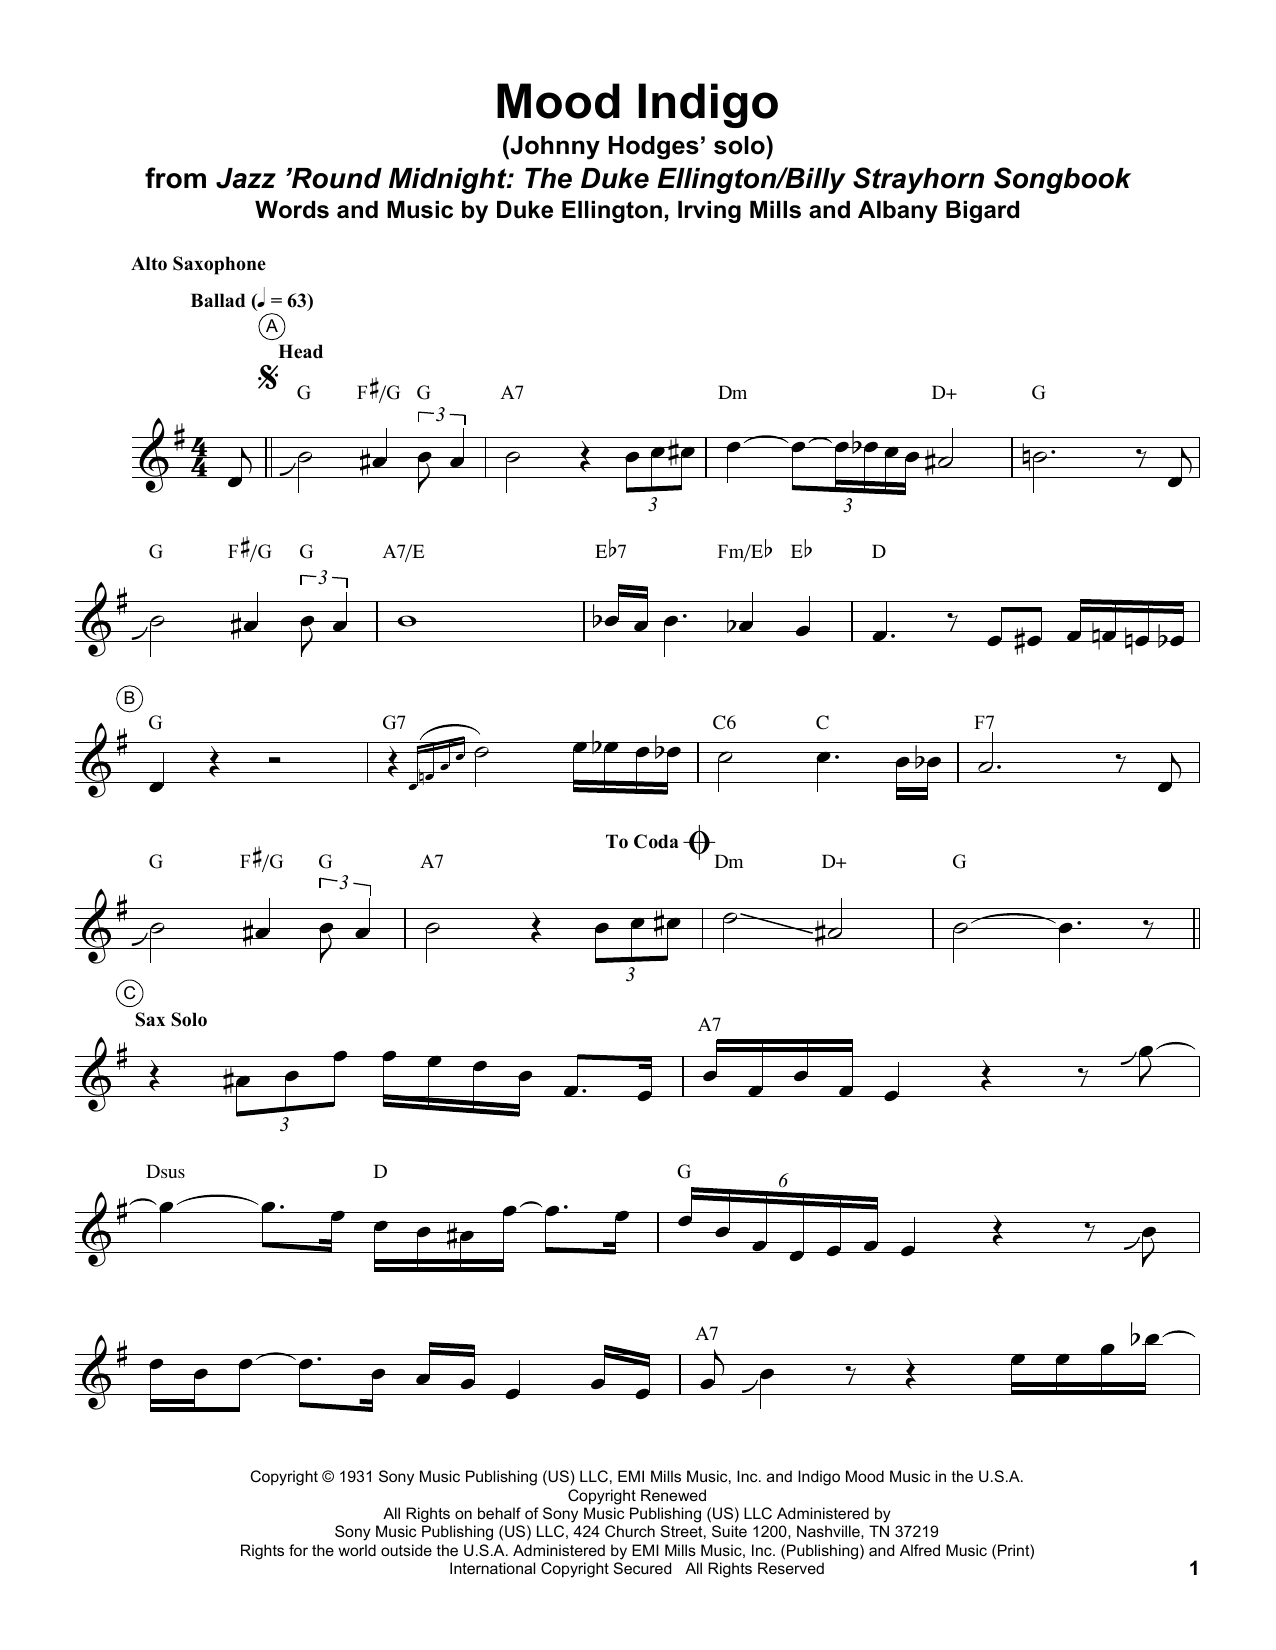 Johnny Hodges Mood Indigo Sheet Music Notes & Chords for Alto Sax Transcription - Download or Print PDF